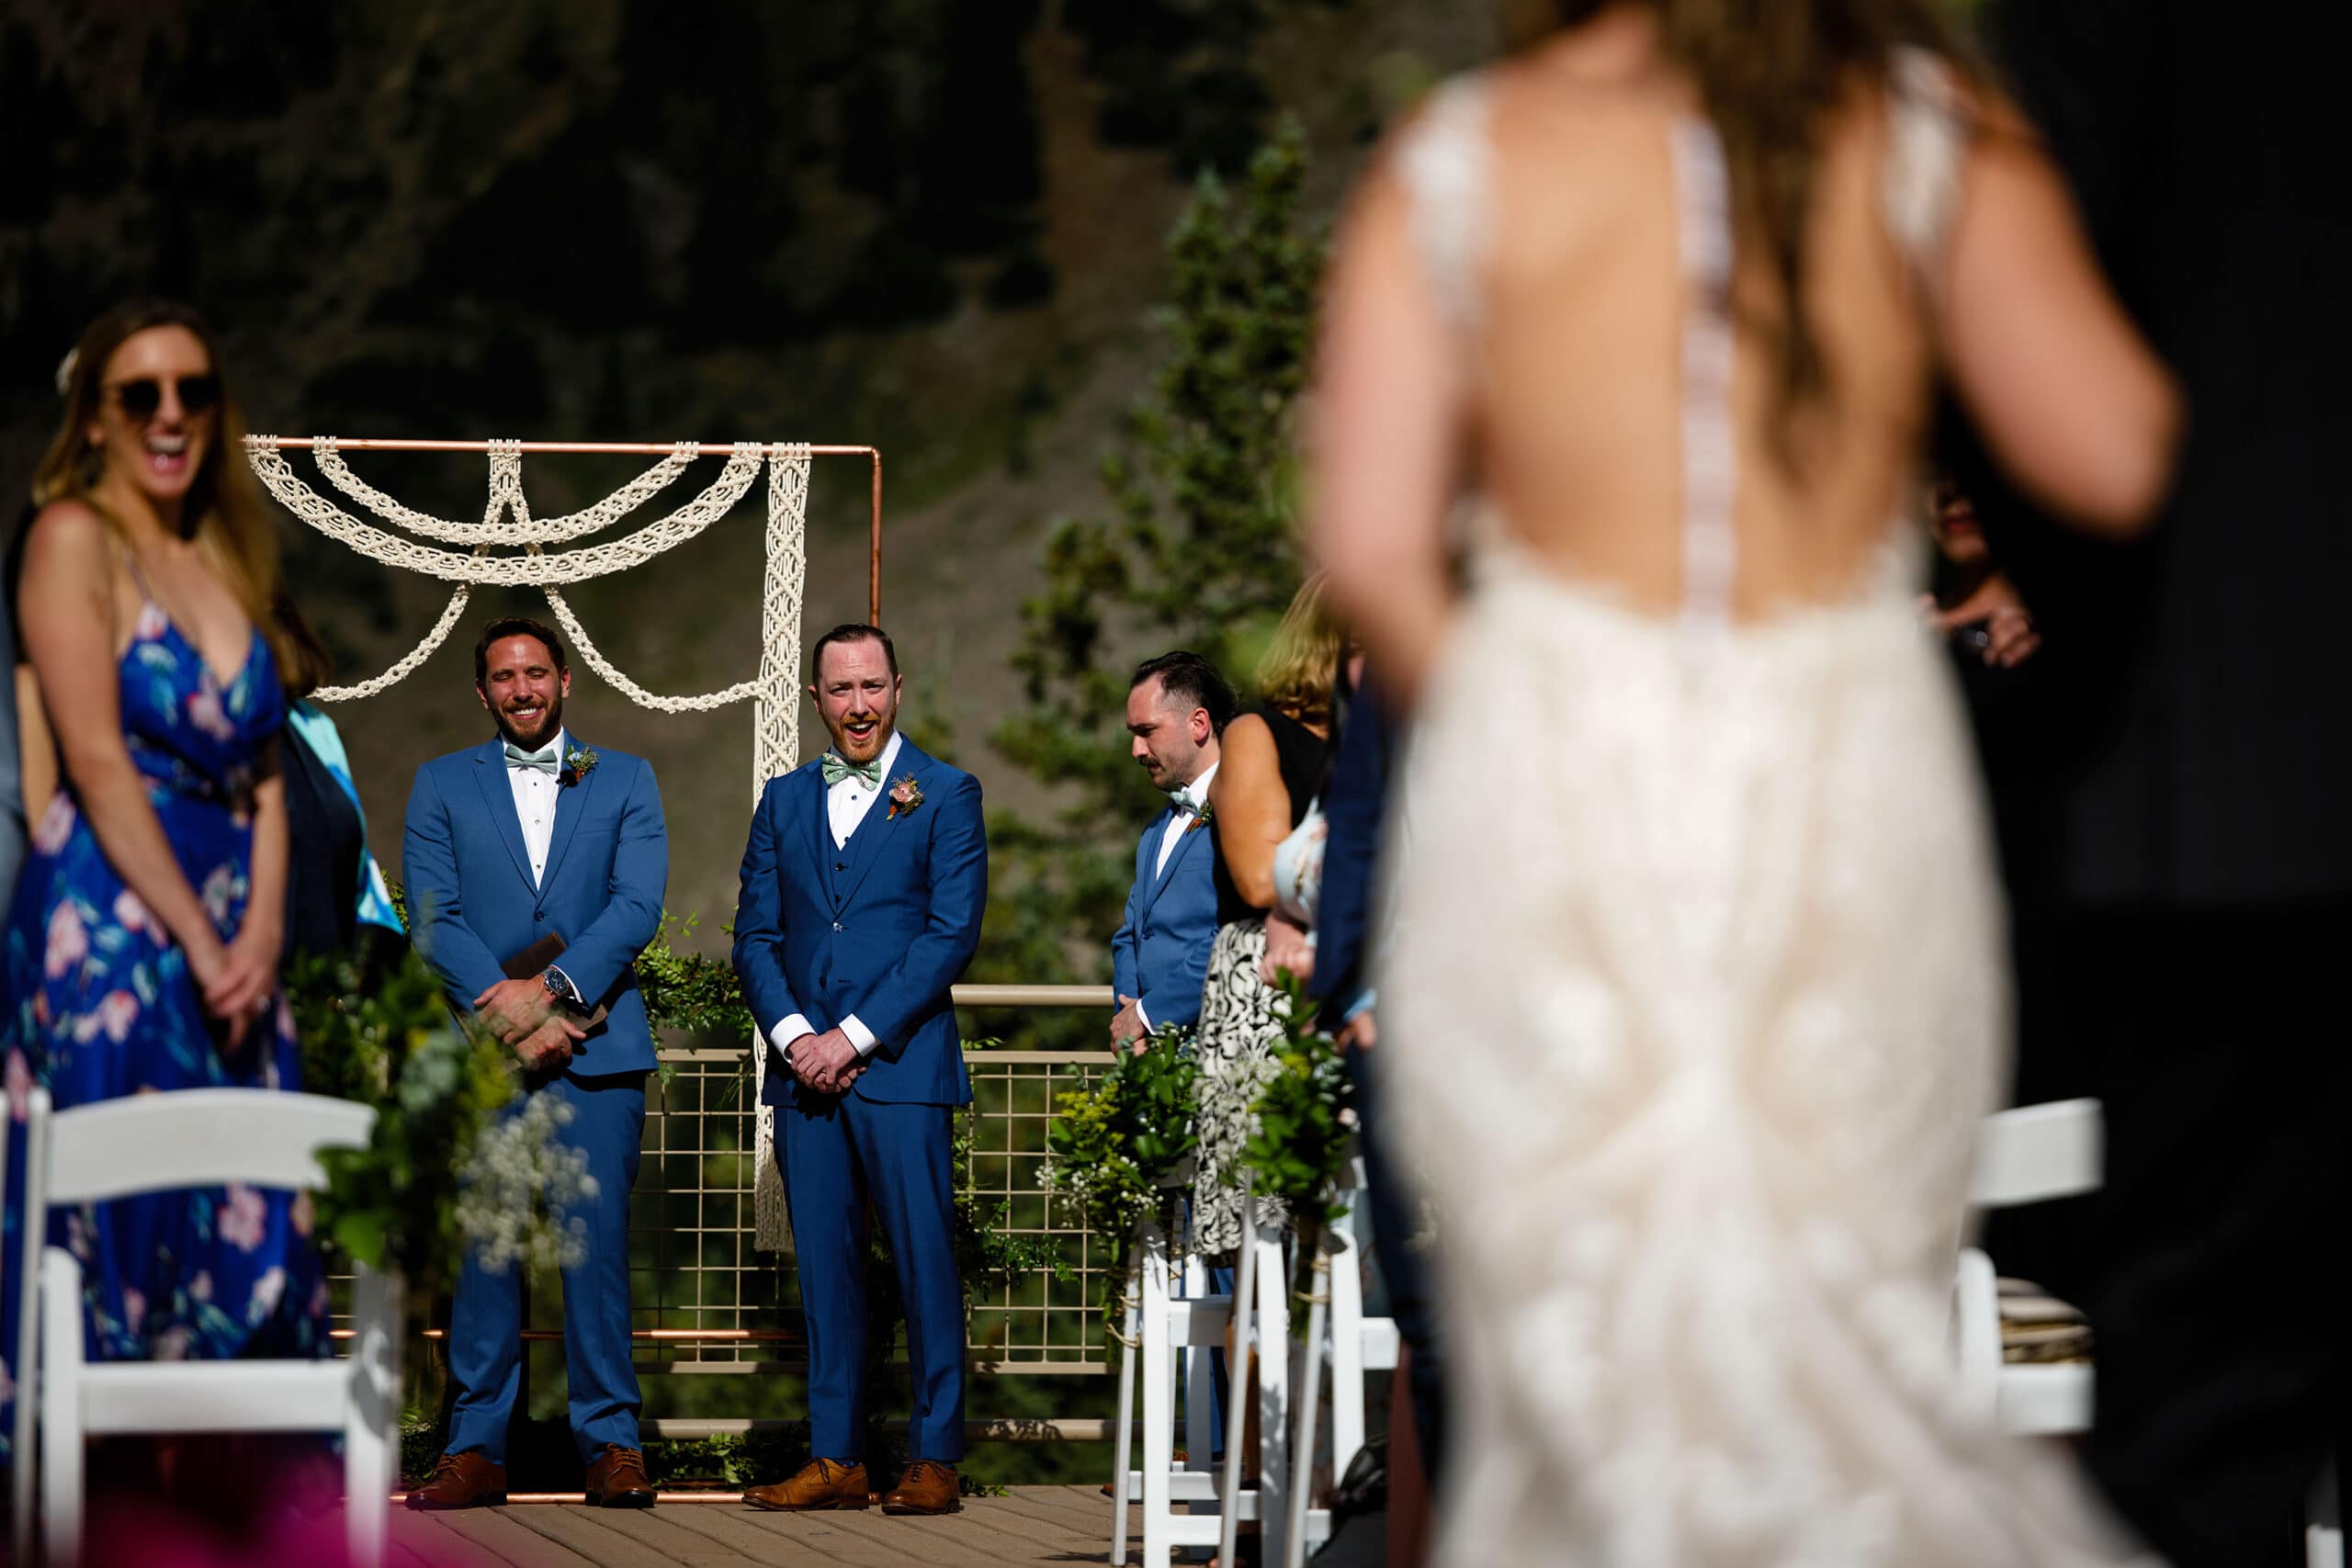 Gavin reacts as the bride walks down the aisle